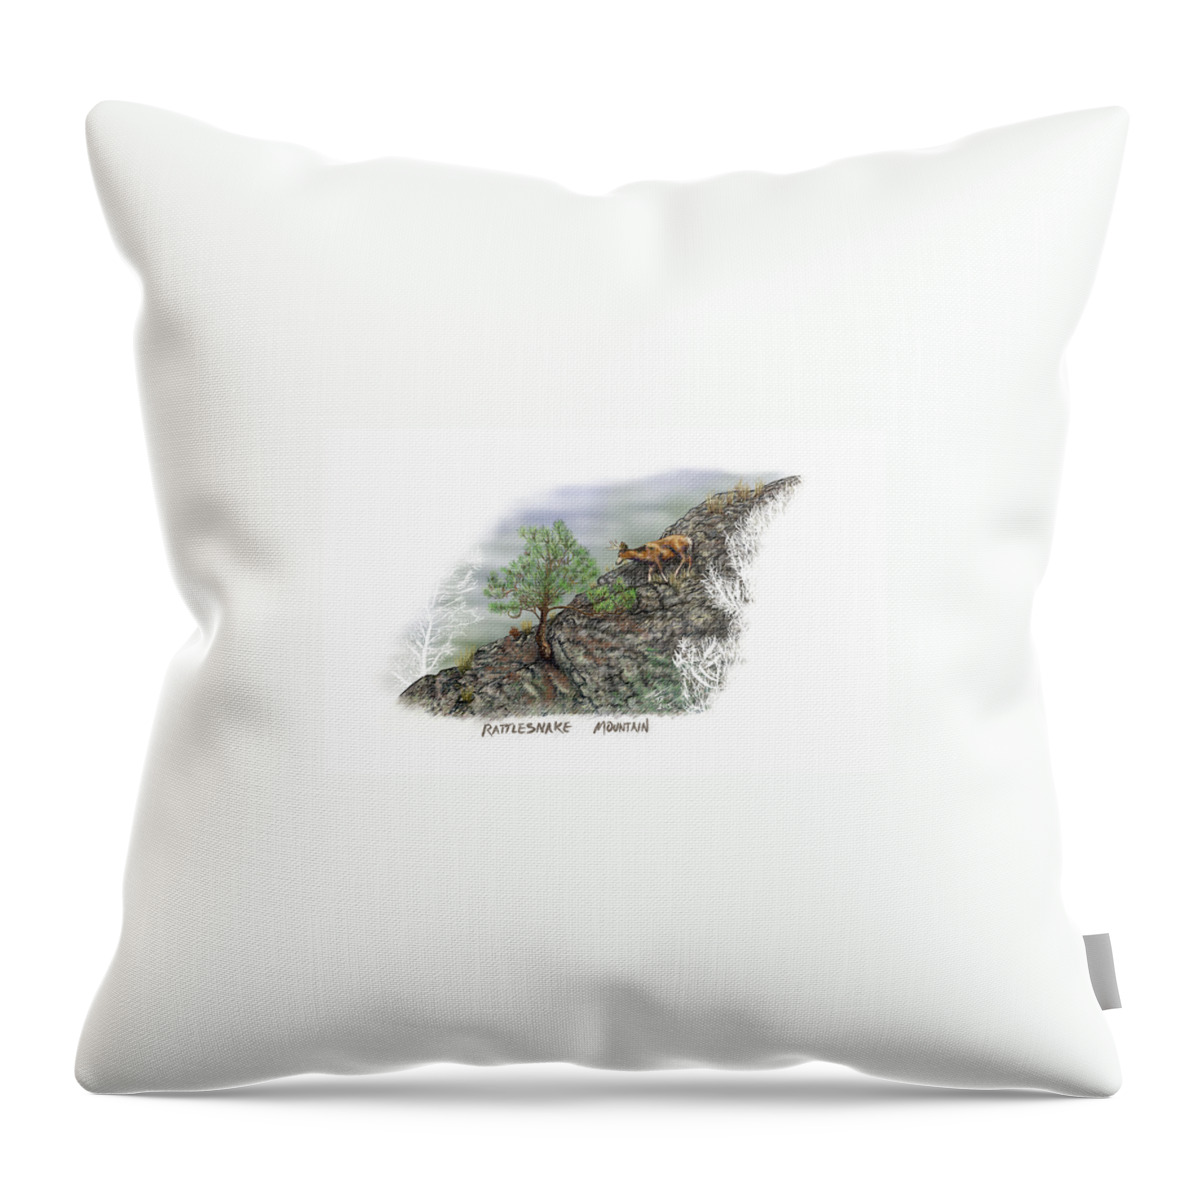 Washington Throw Pillow featuring the digital art Rattlesnake Mountain by Troy Stapek